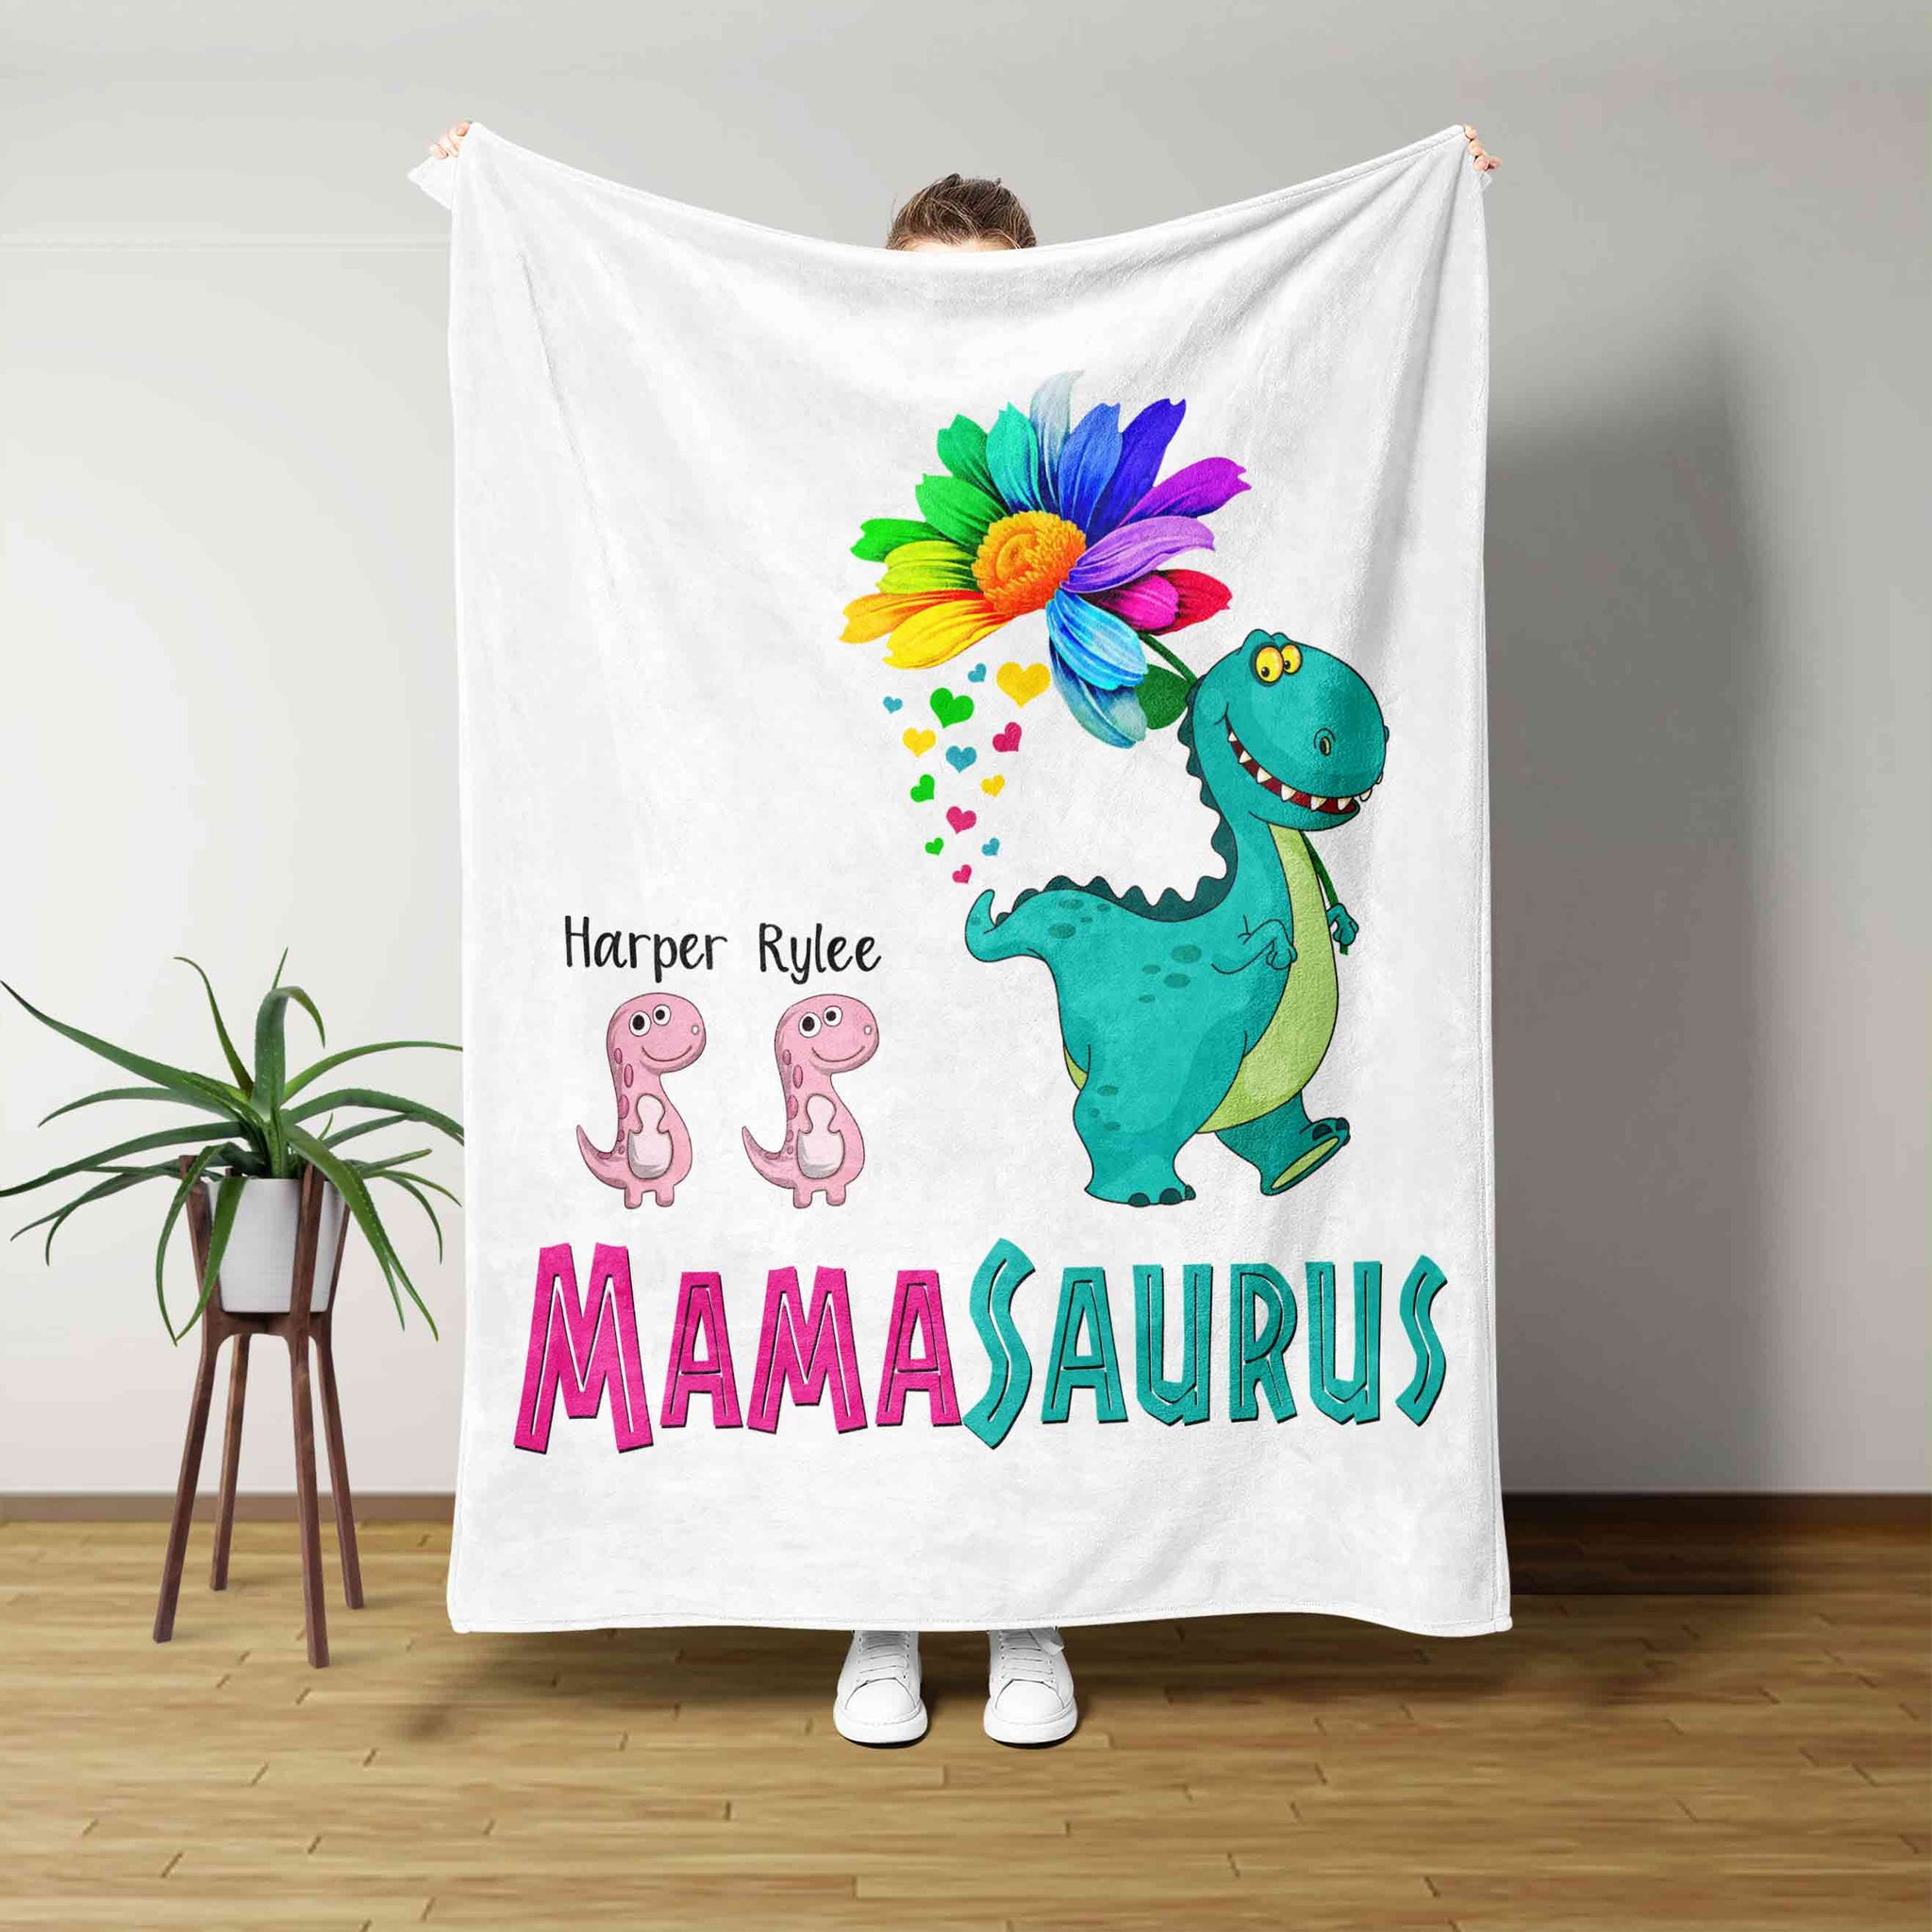 Personalized Name Blanket, Mamasaurus Blanket, Dinosaur Blanket, Flower Blanket, Custom Name Blanket, Gift Blanket